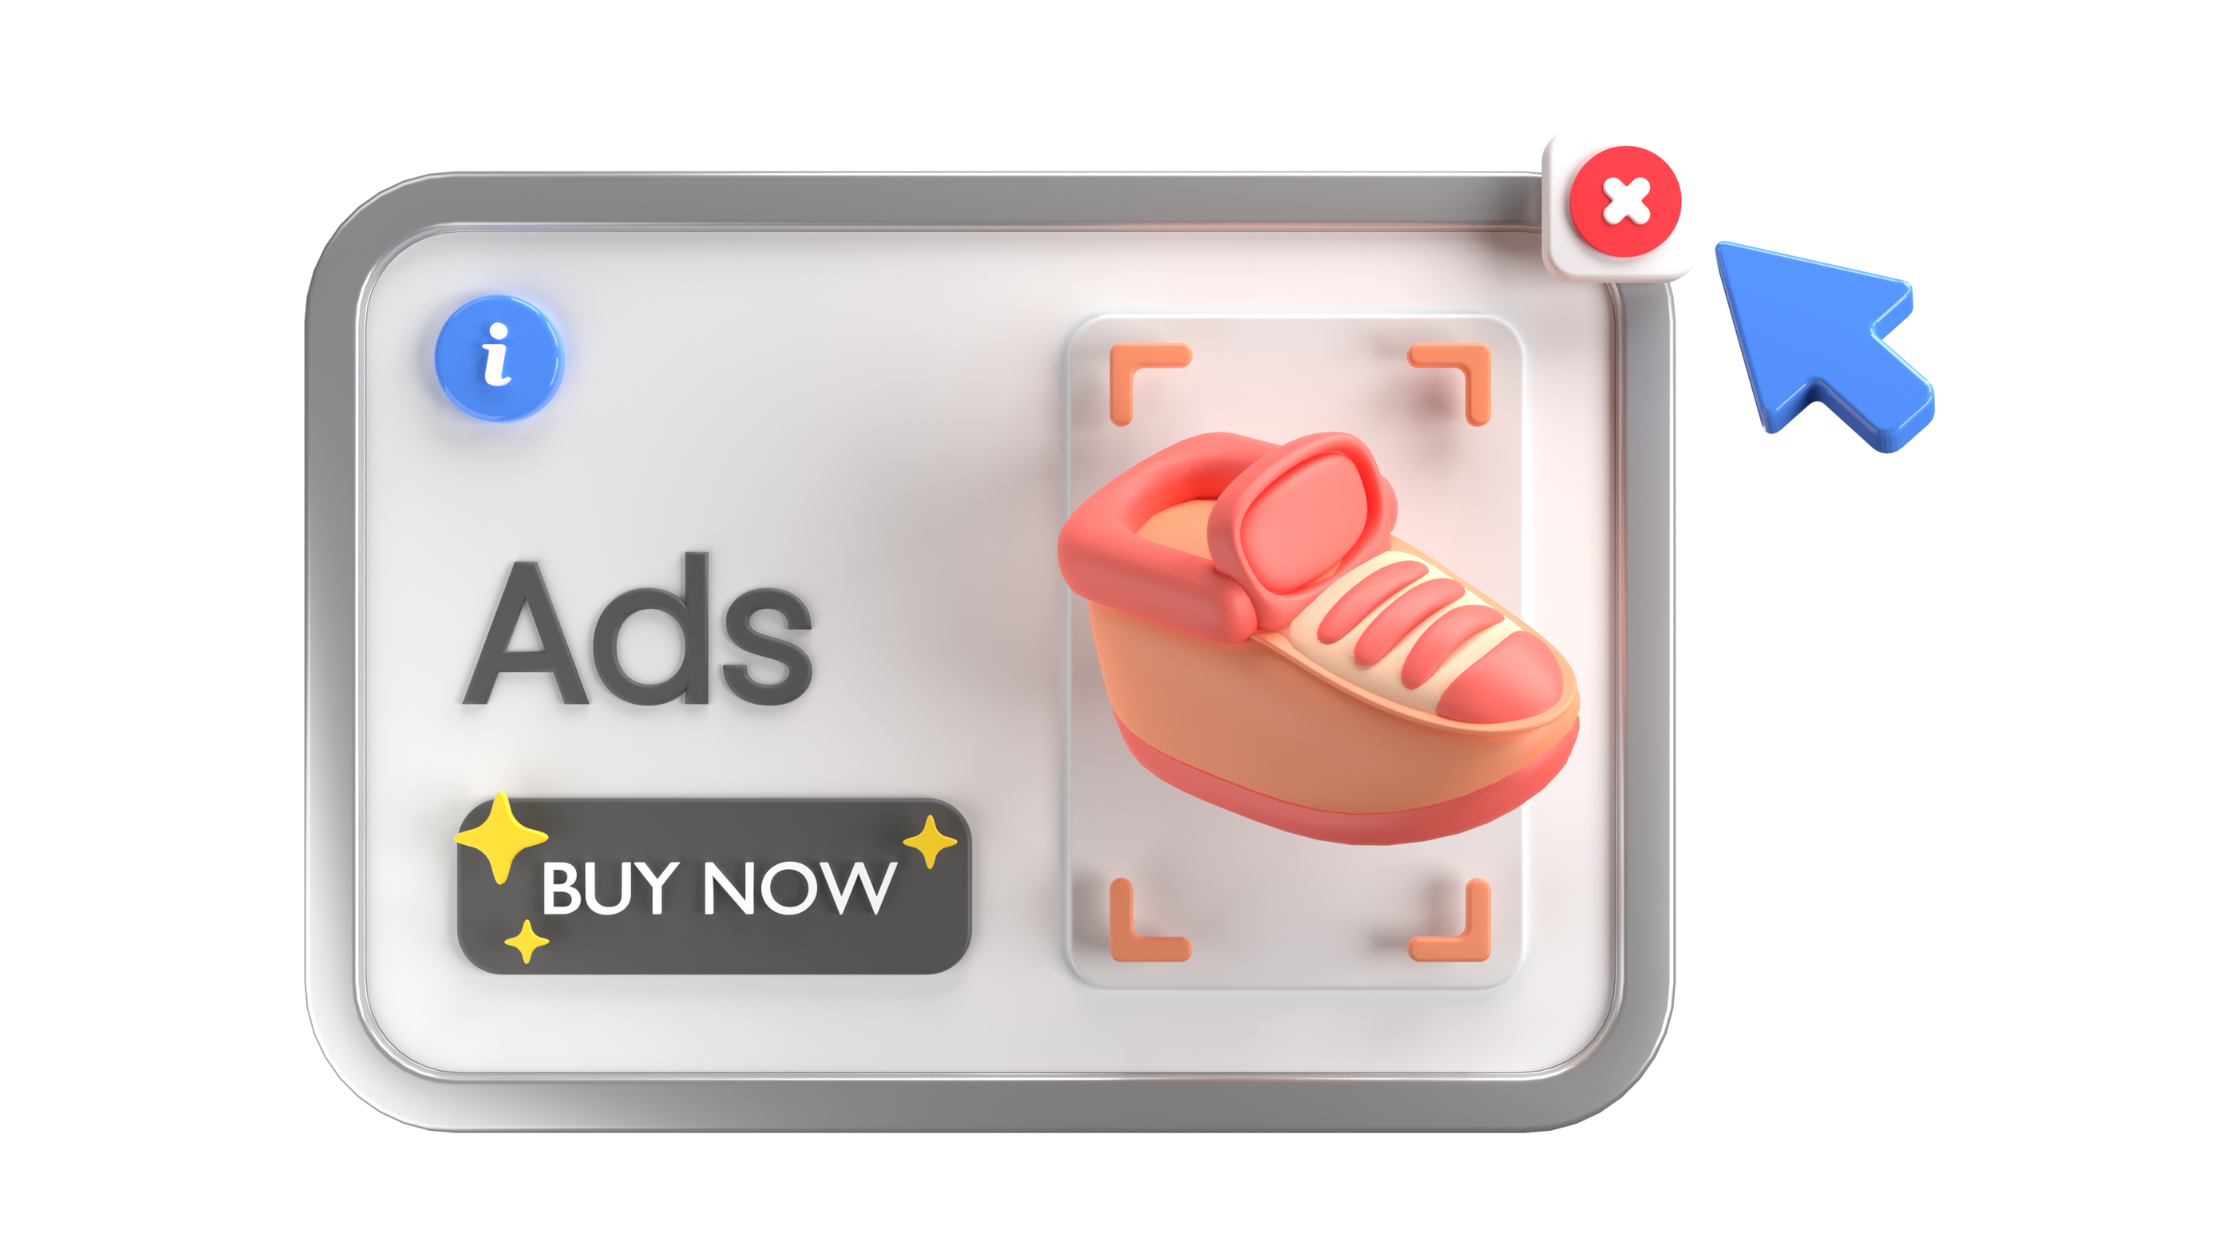 Google shopping ads